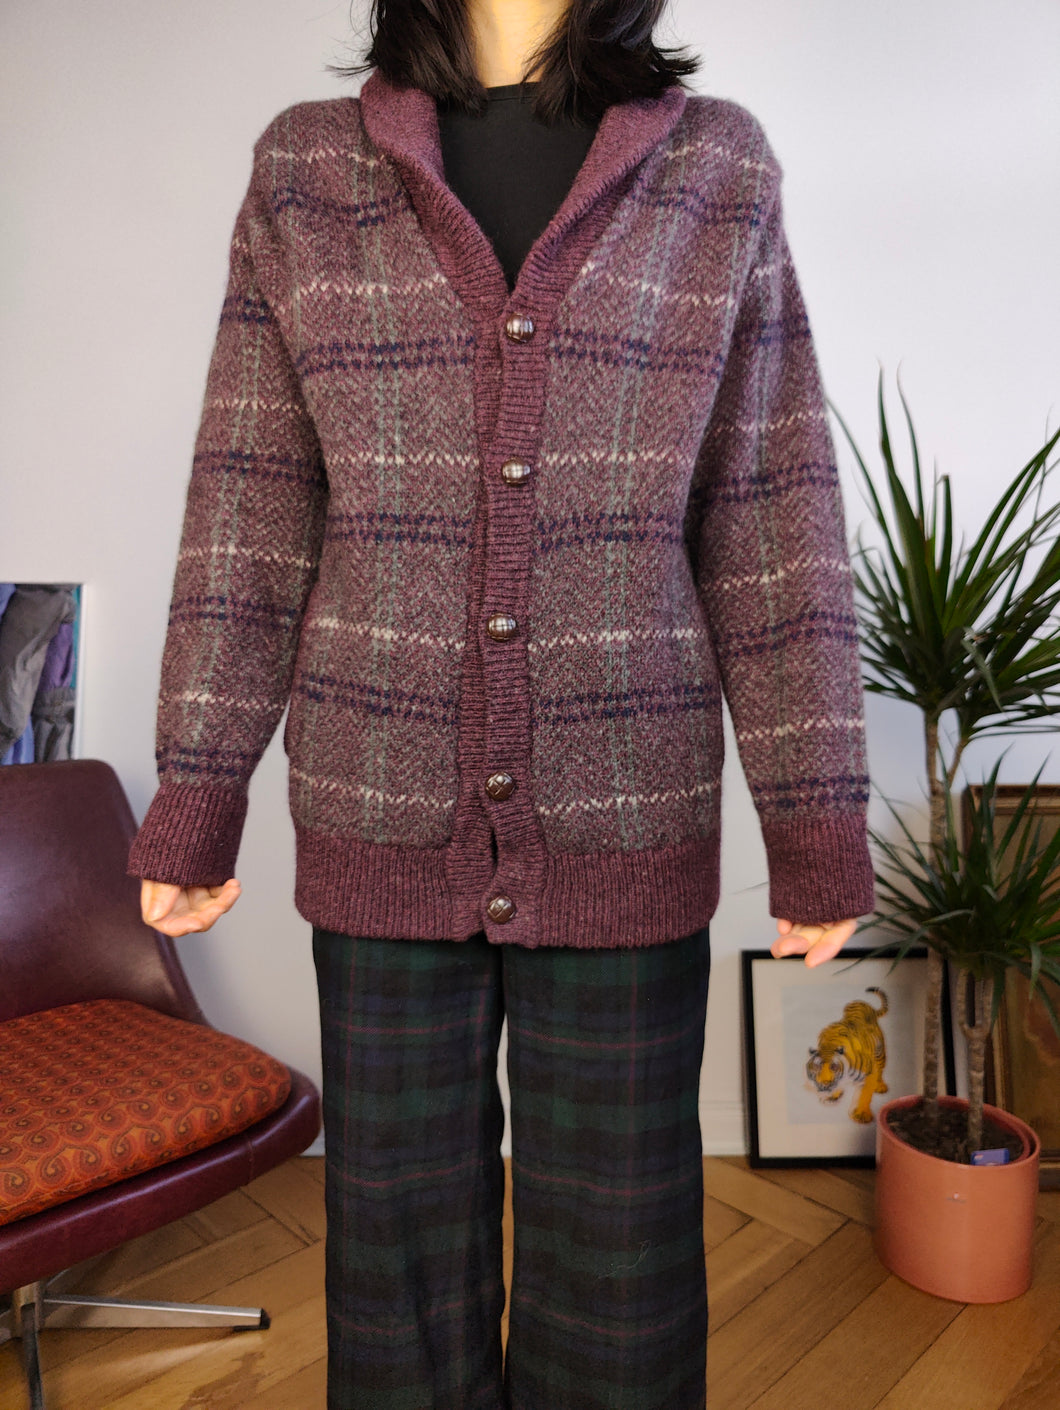 Vintage 100% Shetland wool cardigan tartan purple pattern winter check checker knit knitted jacket XS-S